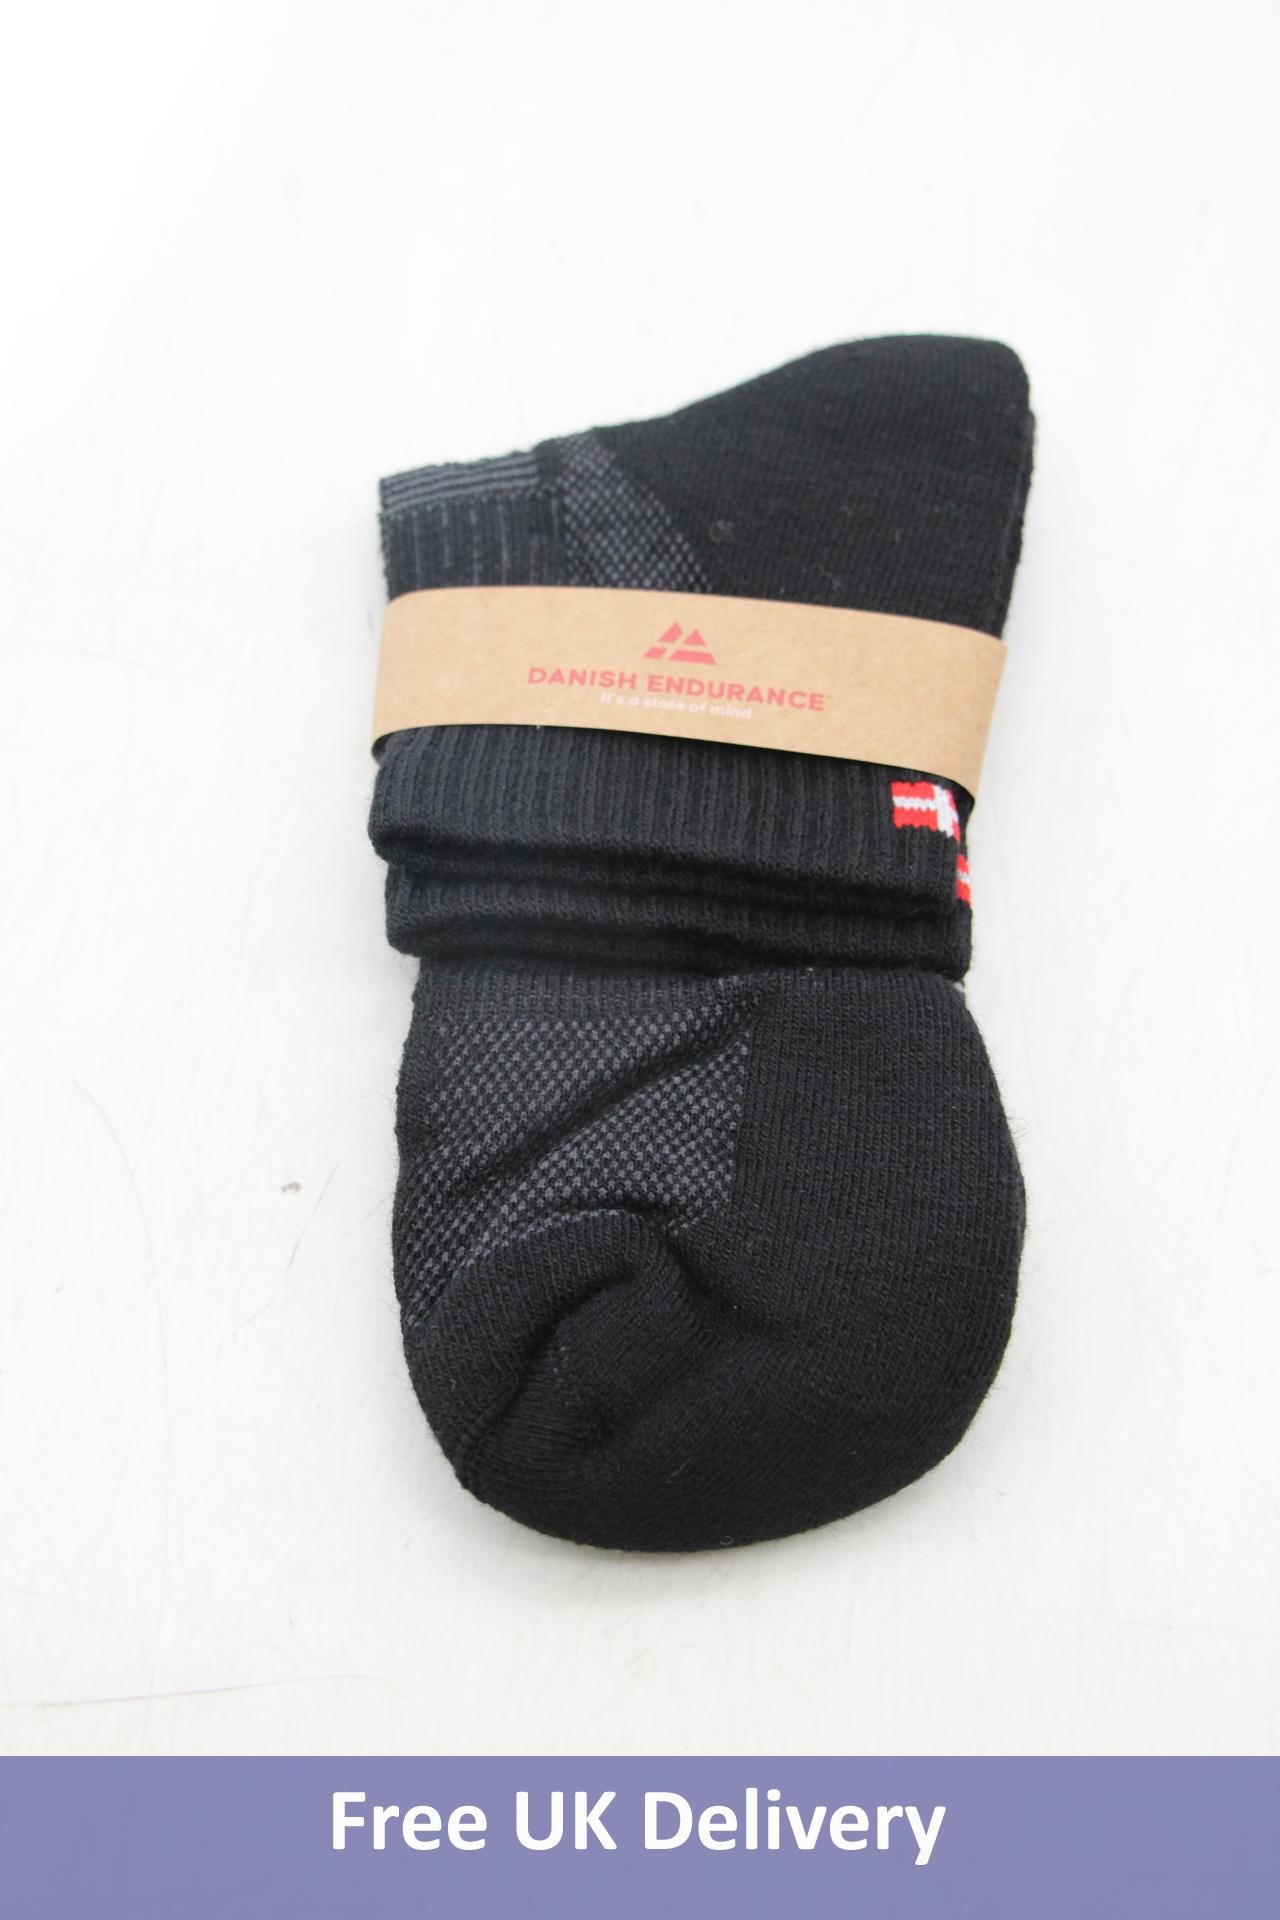 Two Packs of Merino Unisex Wool Hiking Low Cut Socks, Black, UK Size 9-12, 3 Pairs Per Pack